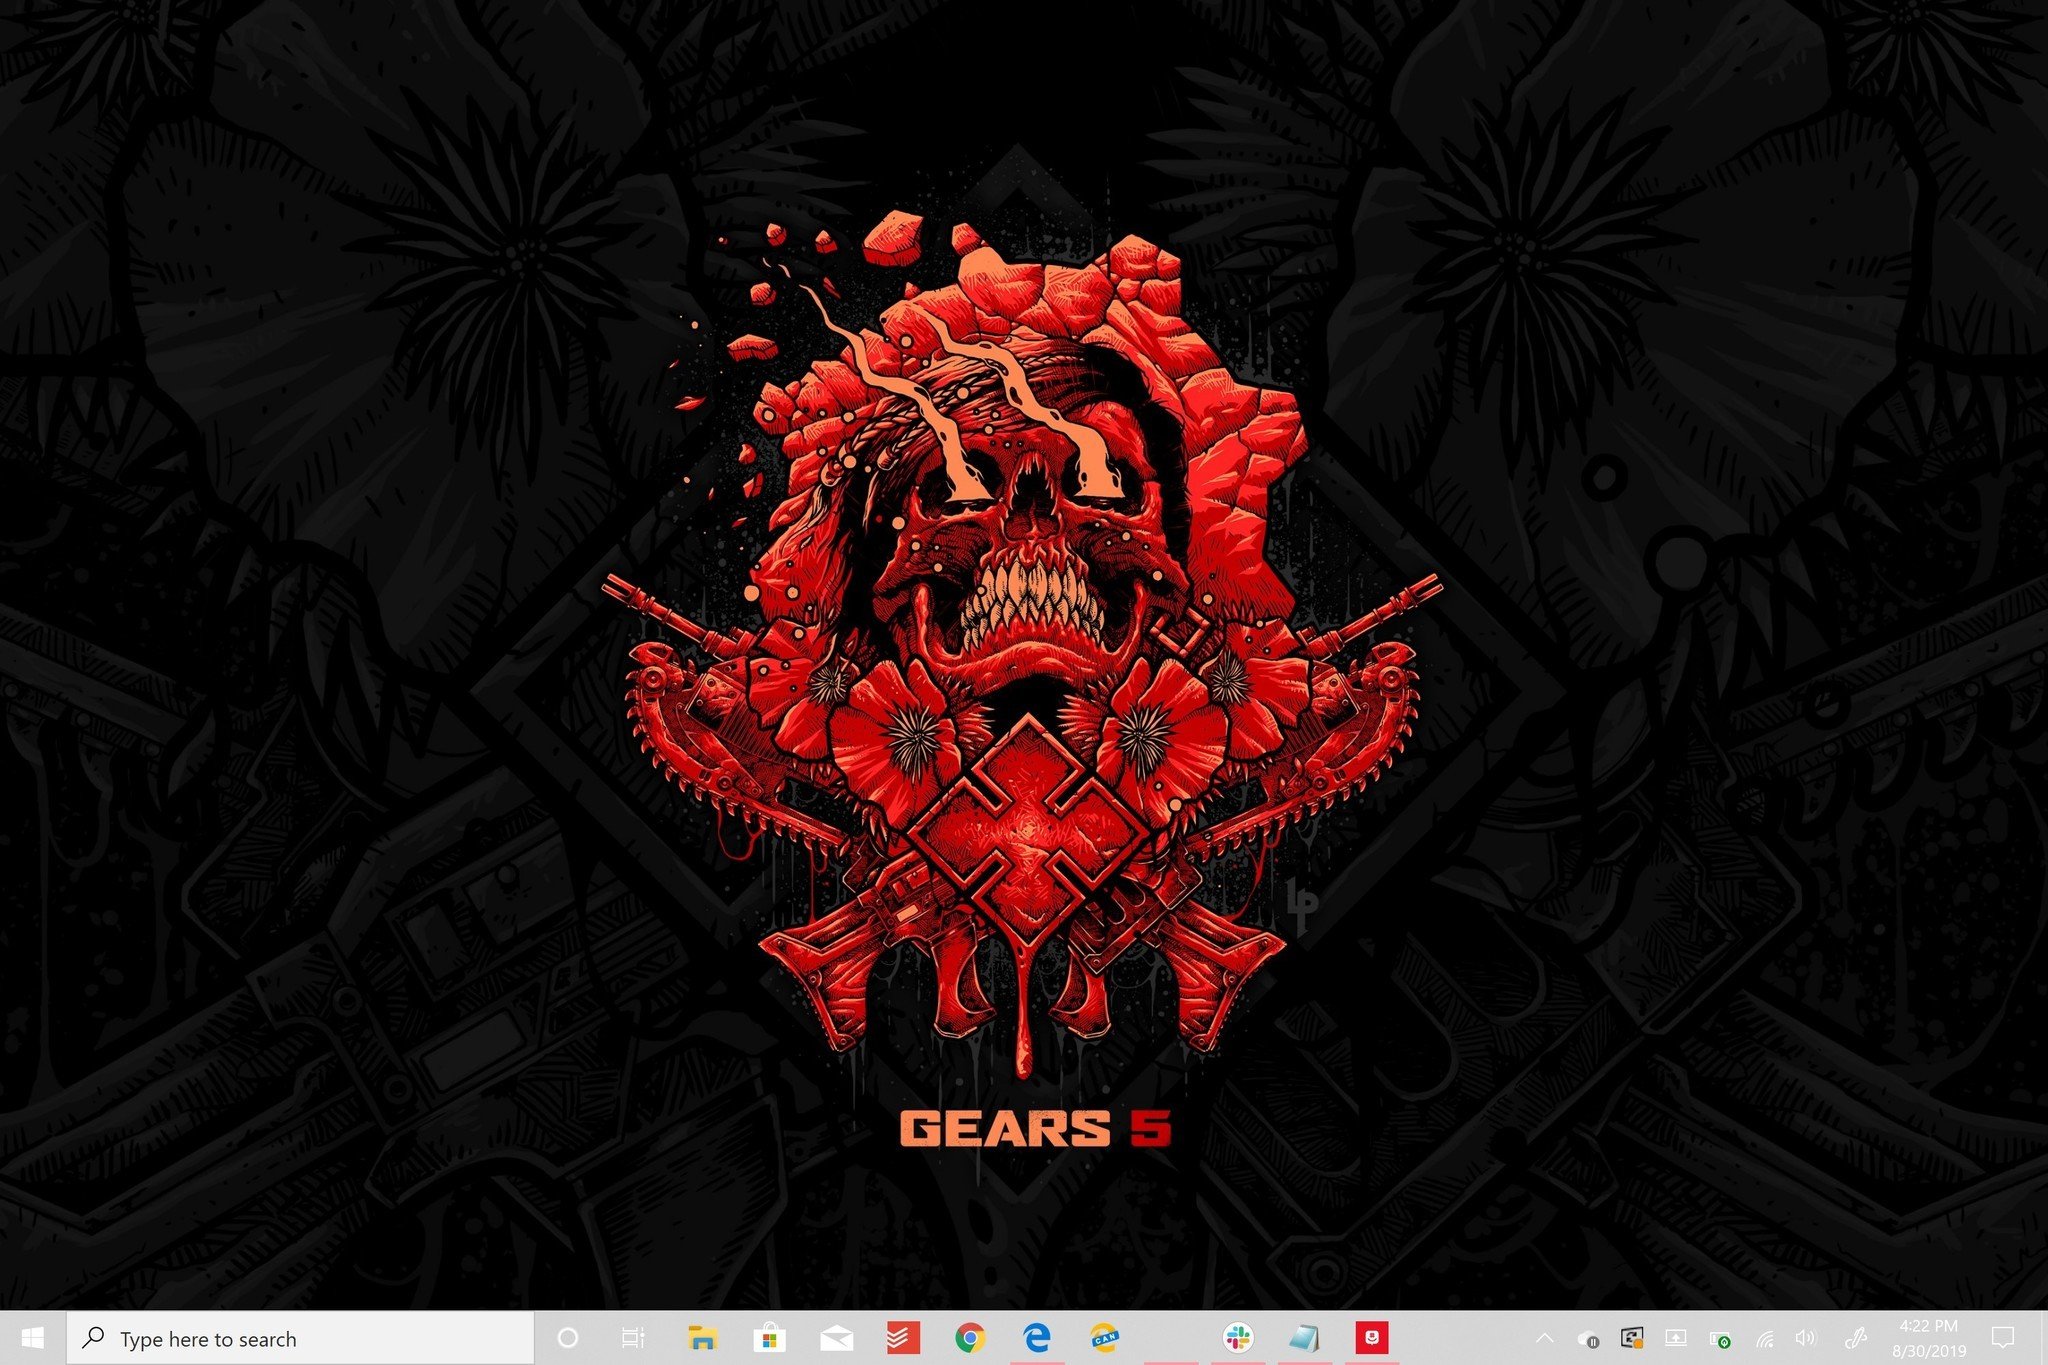 Gears 5 wallpaper pack brings stylized, 4K glory to your desktop